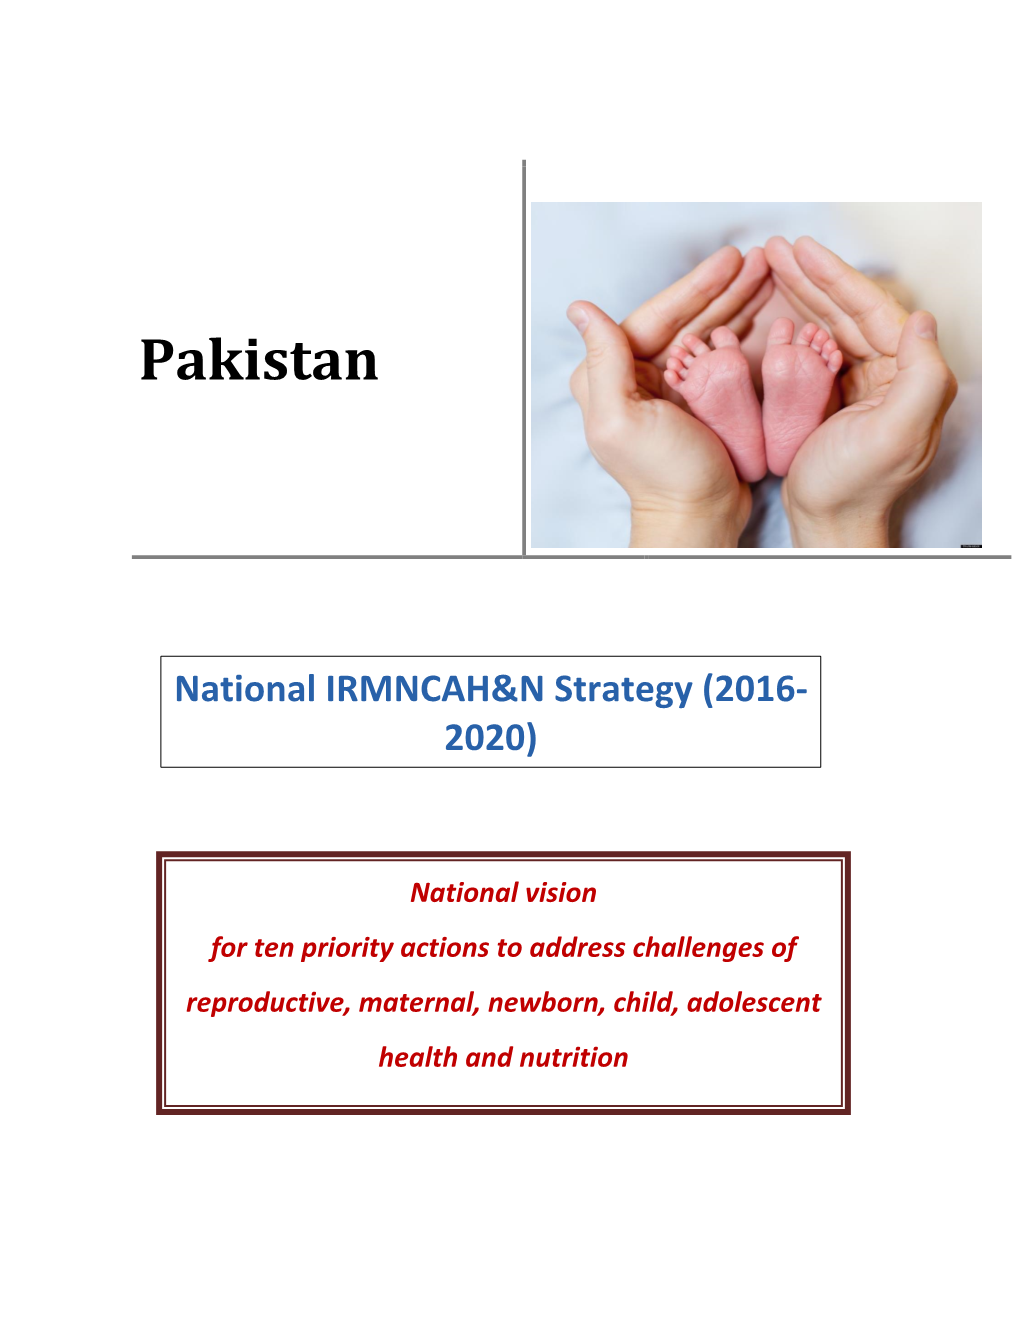 National RMNCAH&N Strategy 2016-2020.Pdf